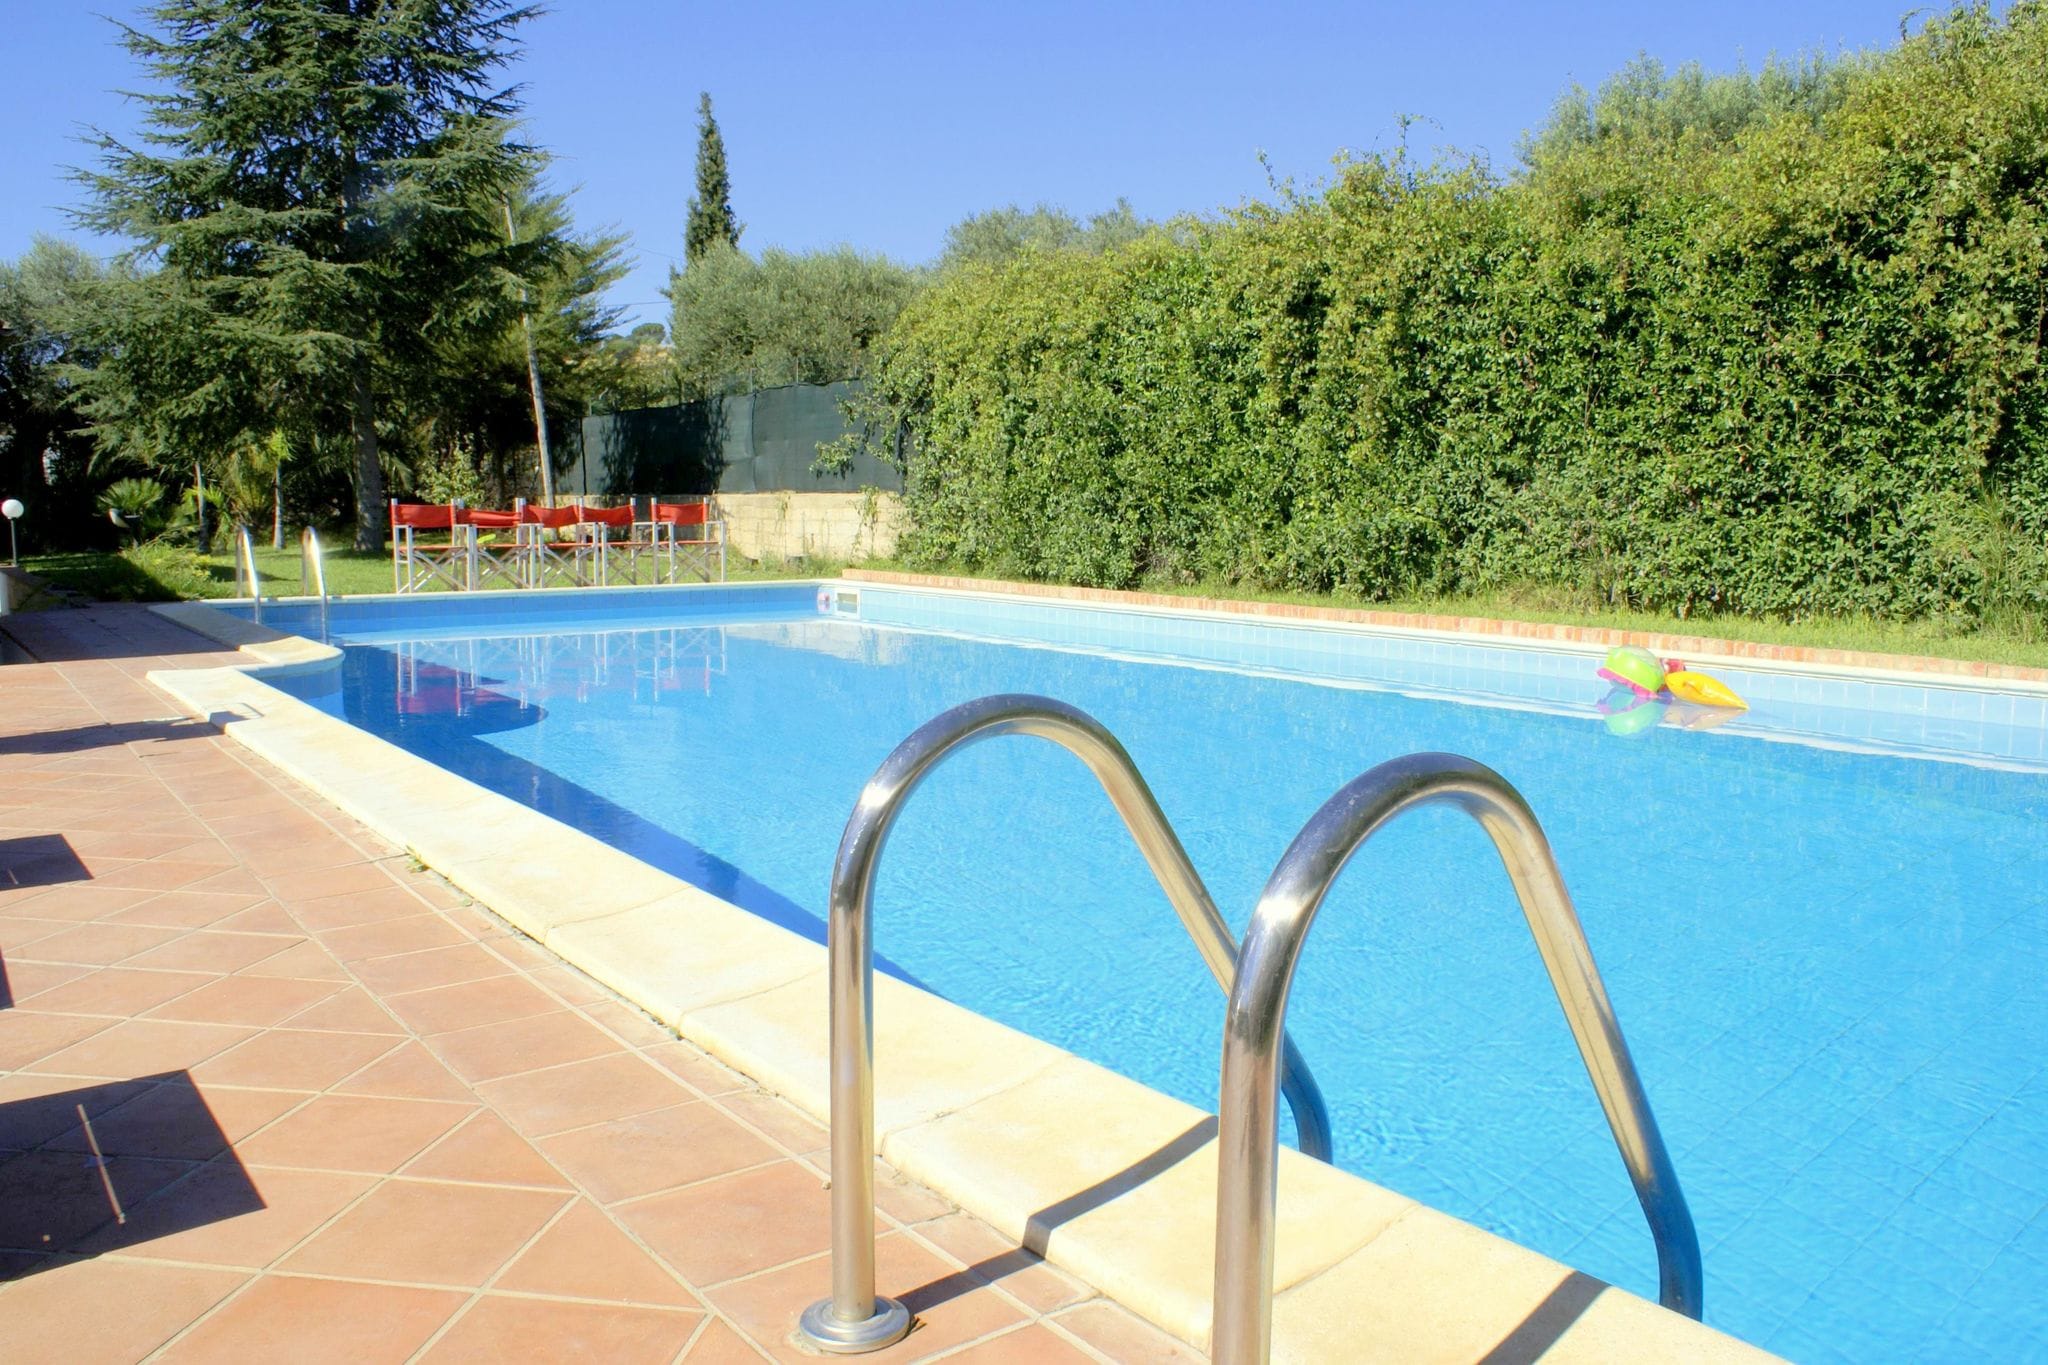 Moderne villa in Caltagirone, Italië met privézwembad